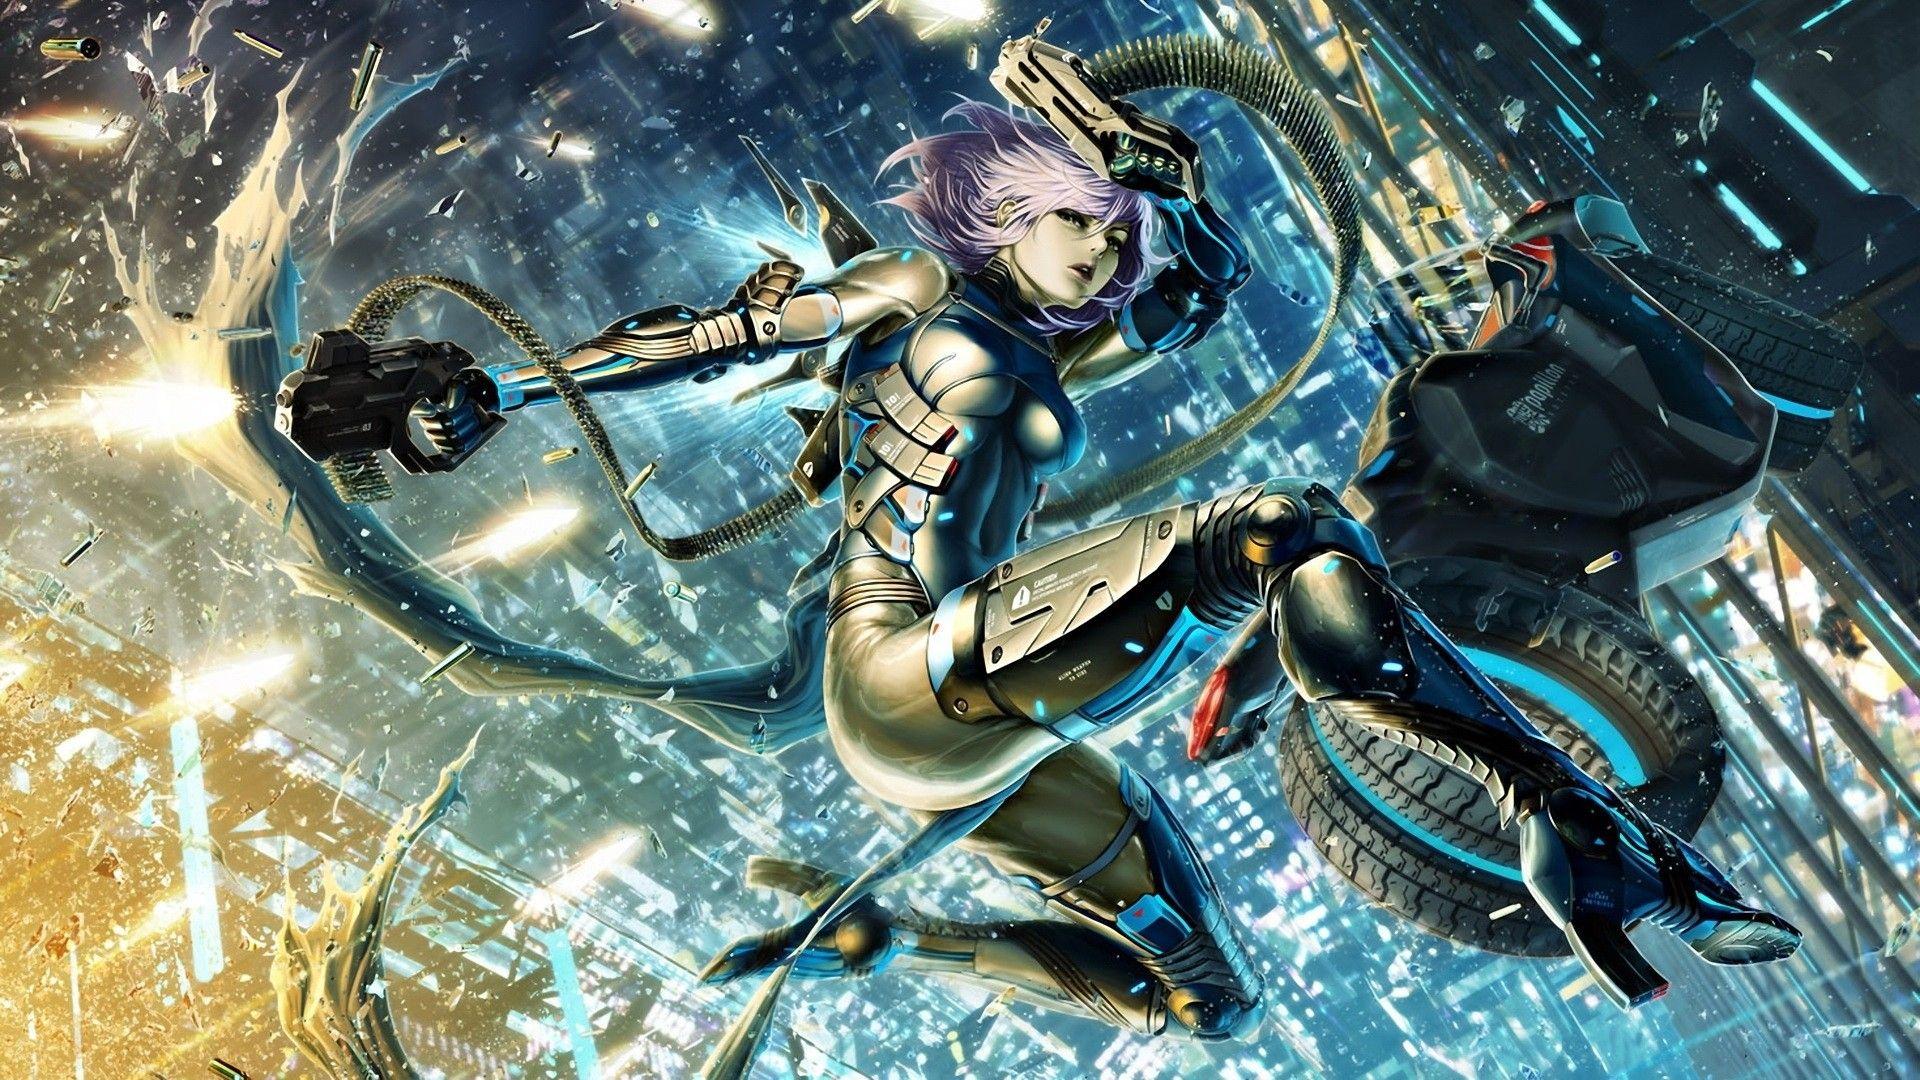 Cyberpunk Anime Wallpaper by Pikswell on DeviantArt